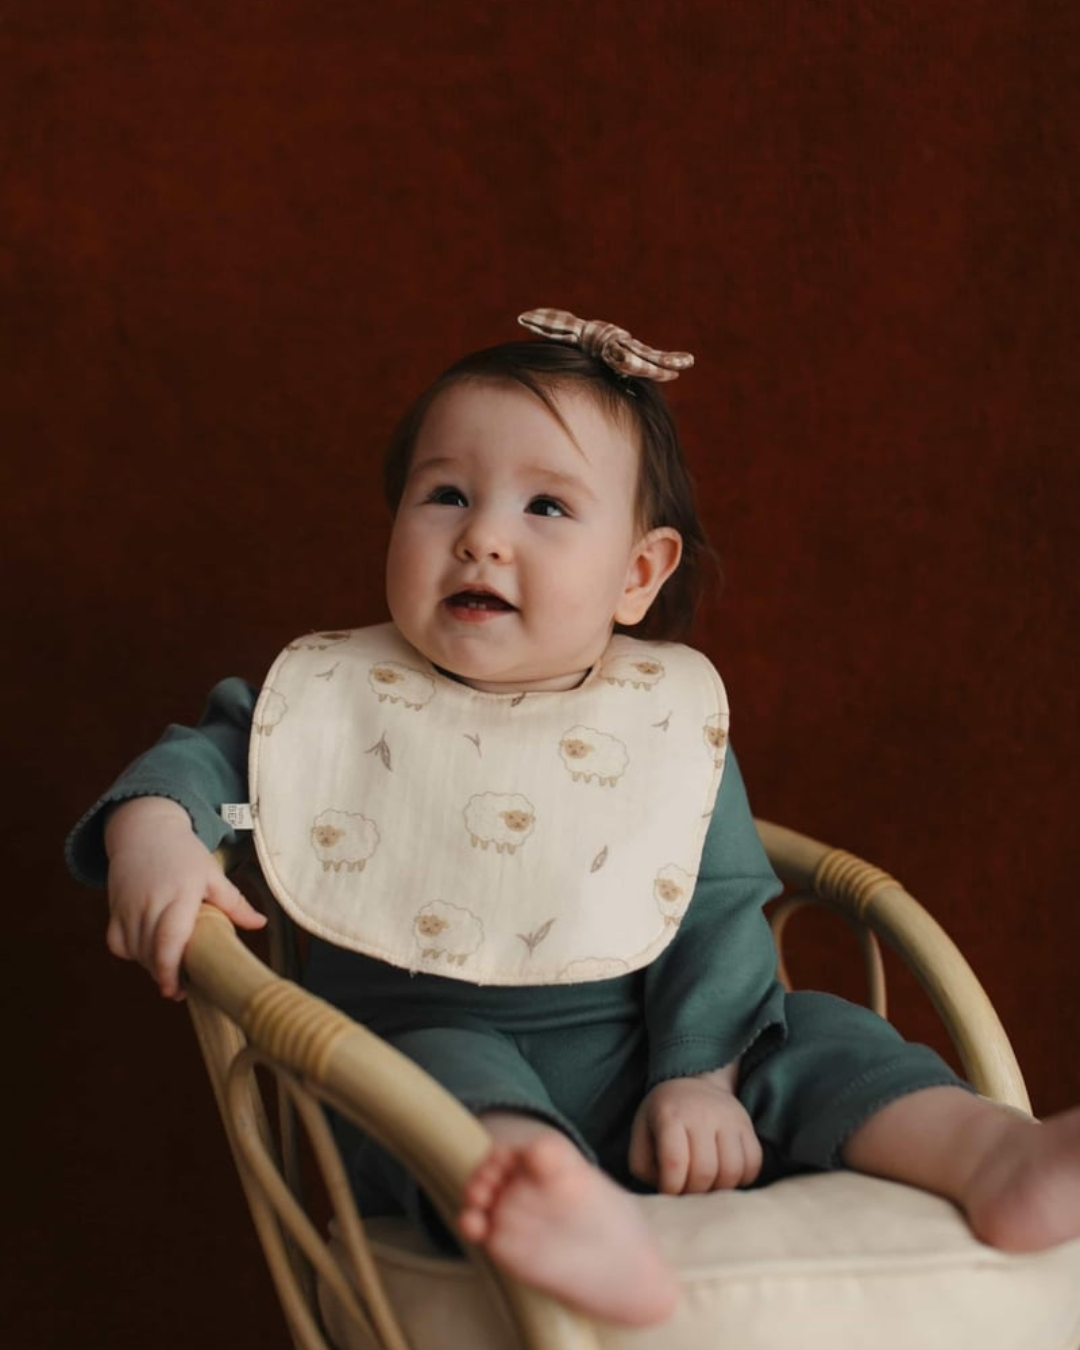 nepromociva portikla za bebe krem boje sa motivom jagnjeta na bebi na stolici